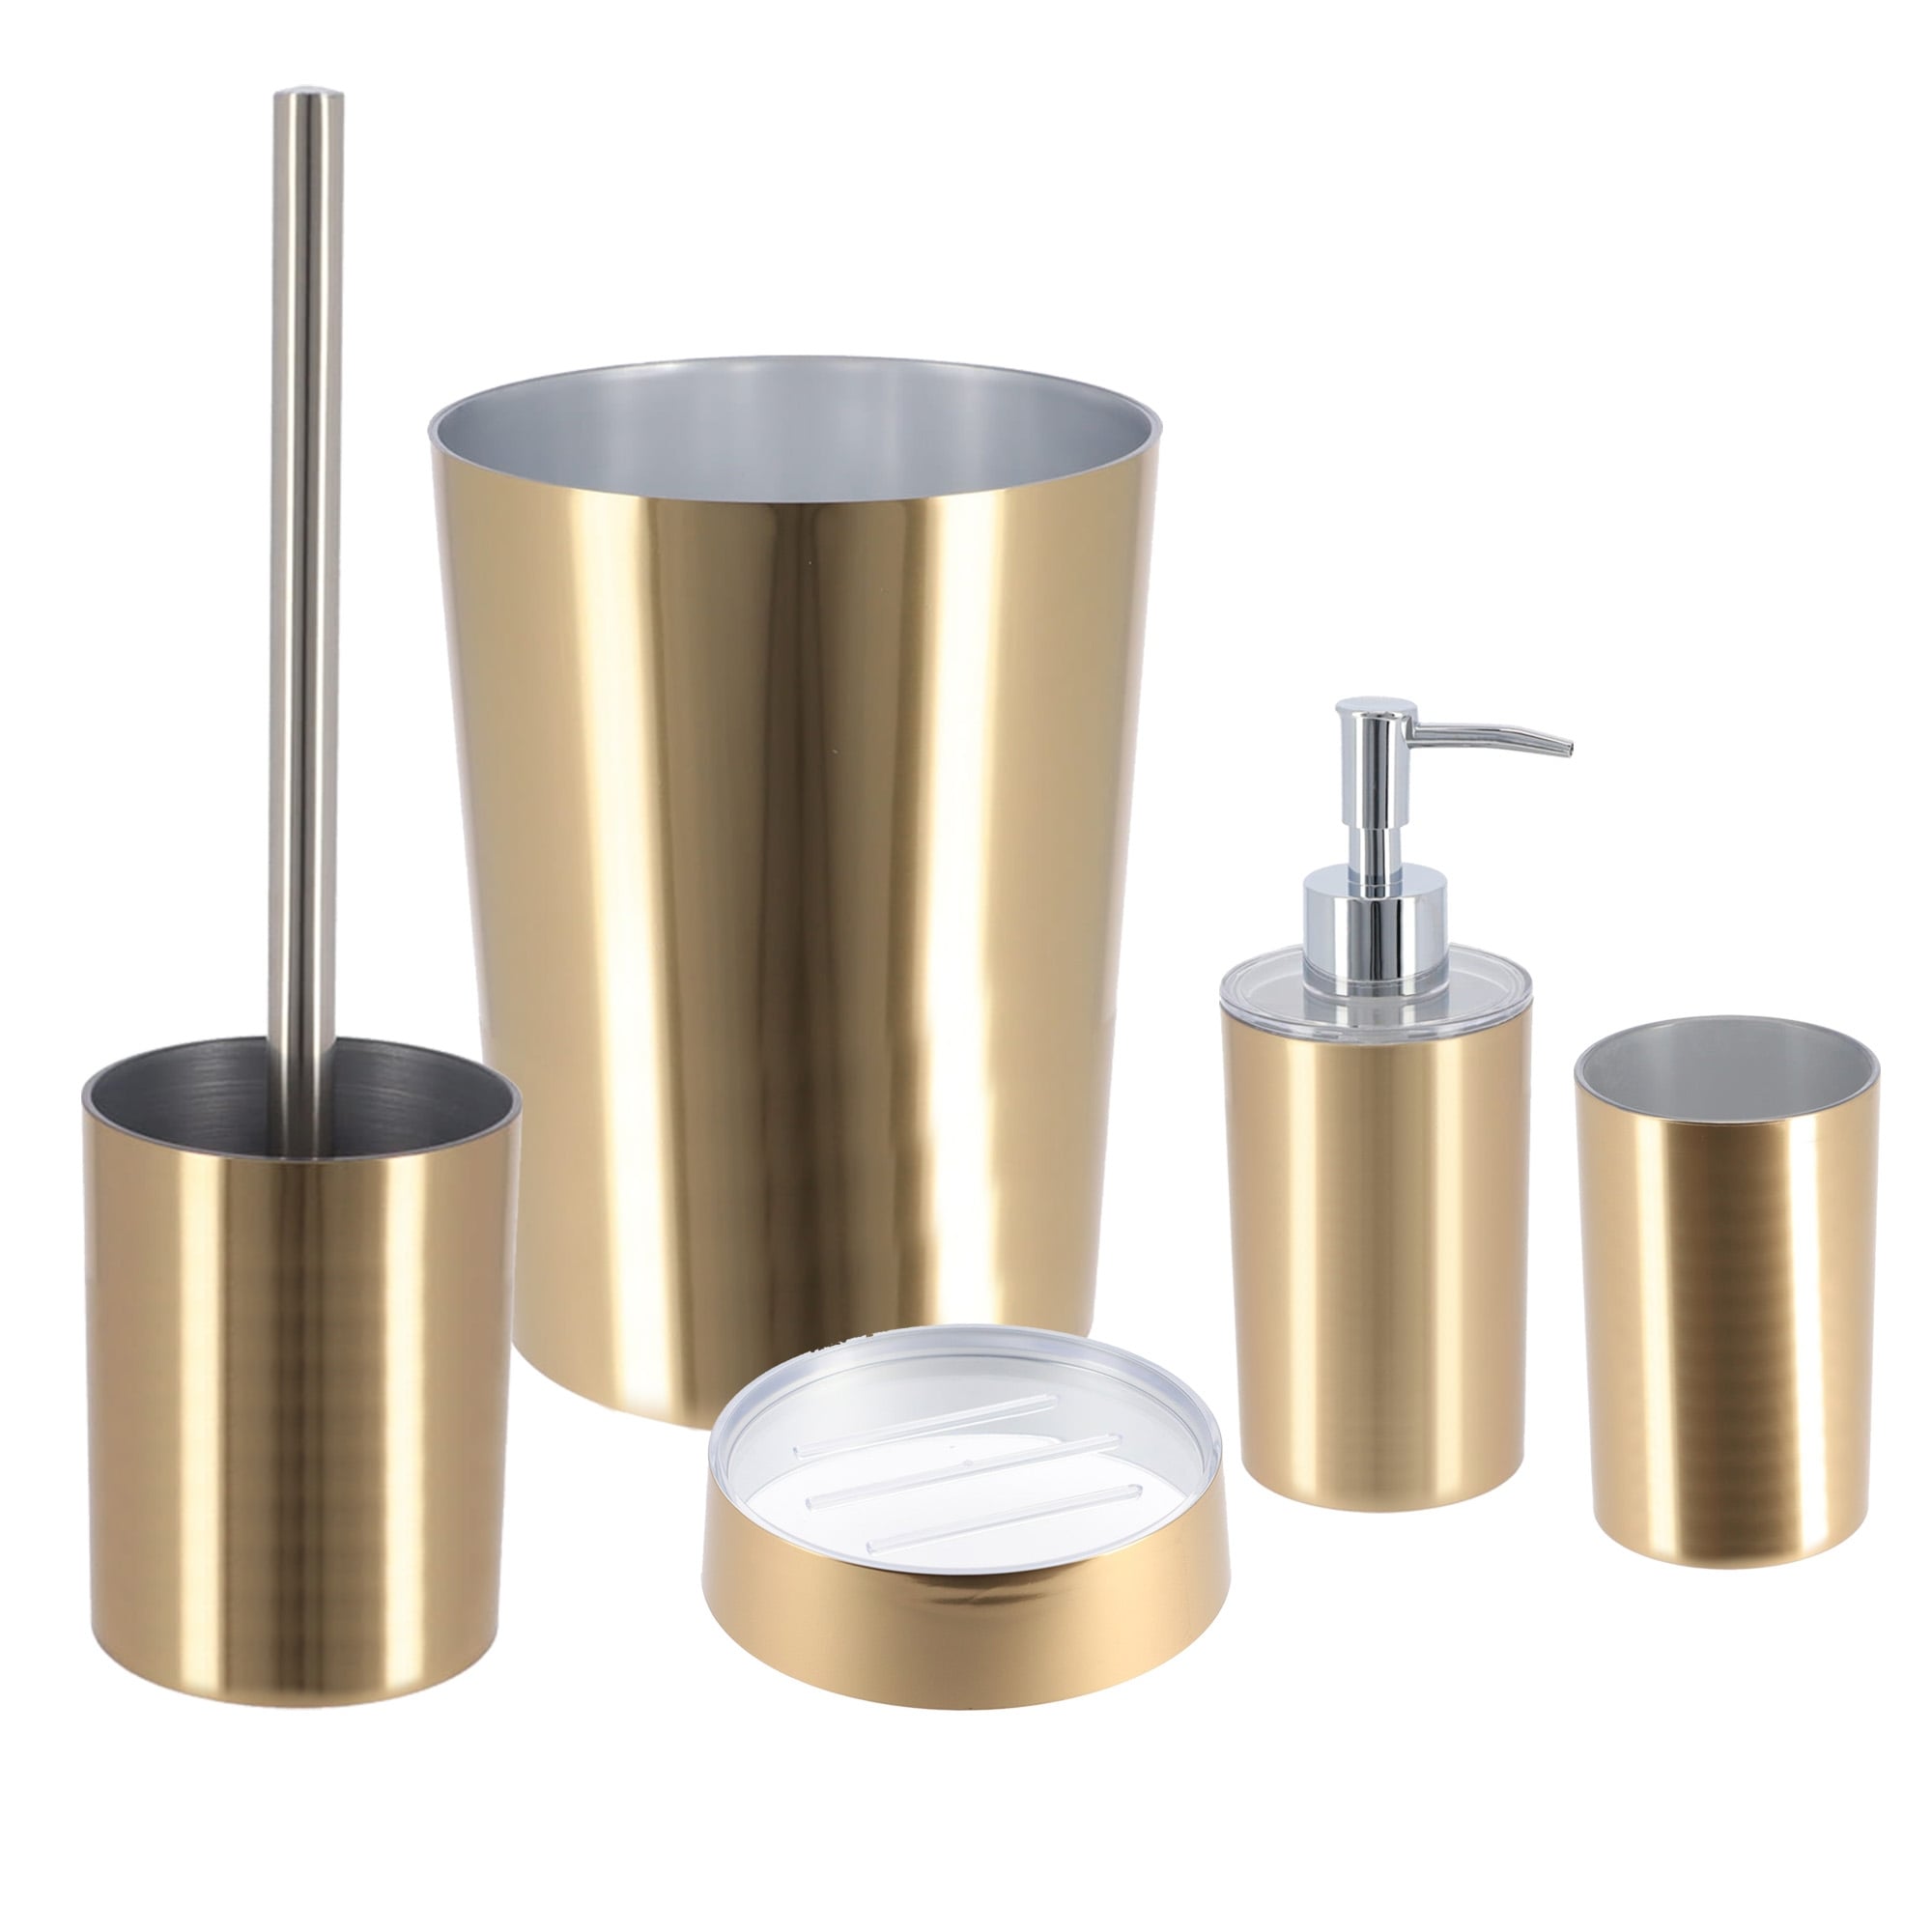 Stainless silver bathroom accessories resin bathroom set - Bath Access – La  Moderno